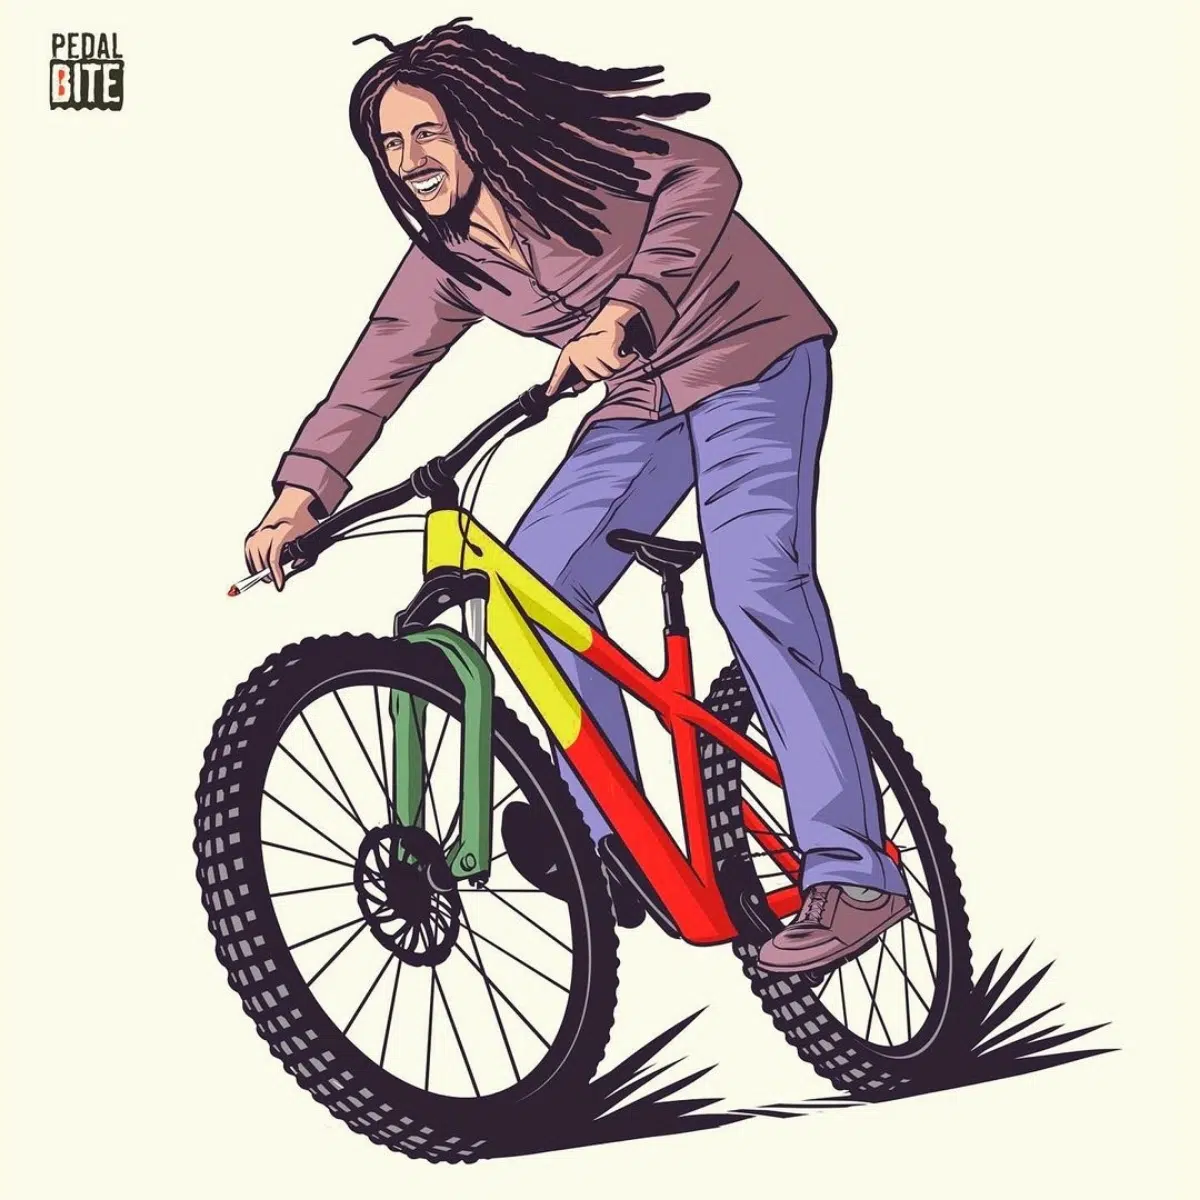 DOWNLOAD: Bob Marley – “Buffalo soldier” Mp3